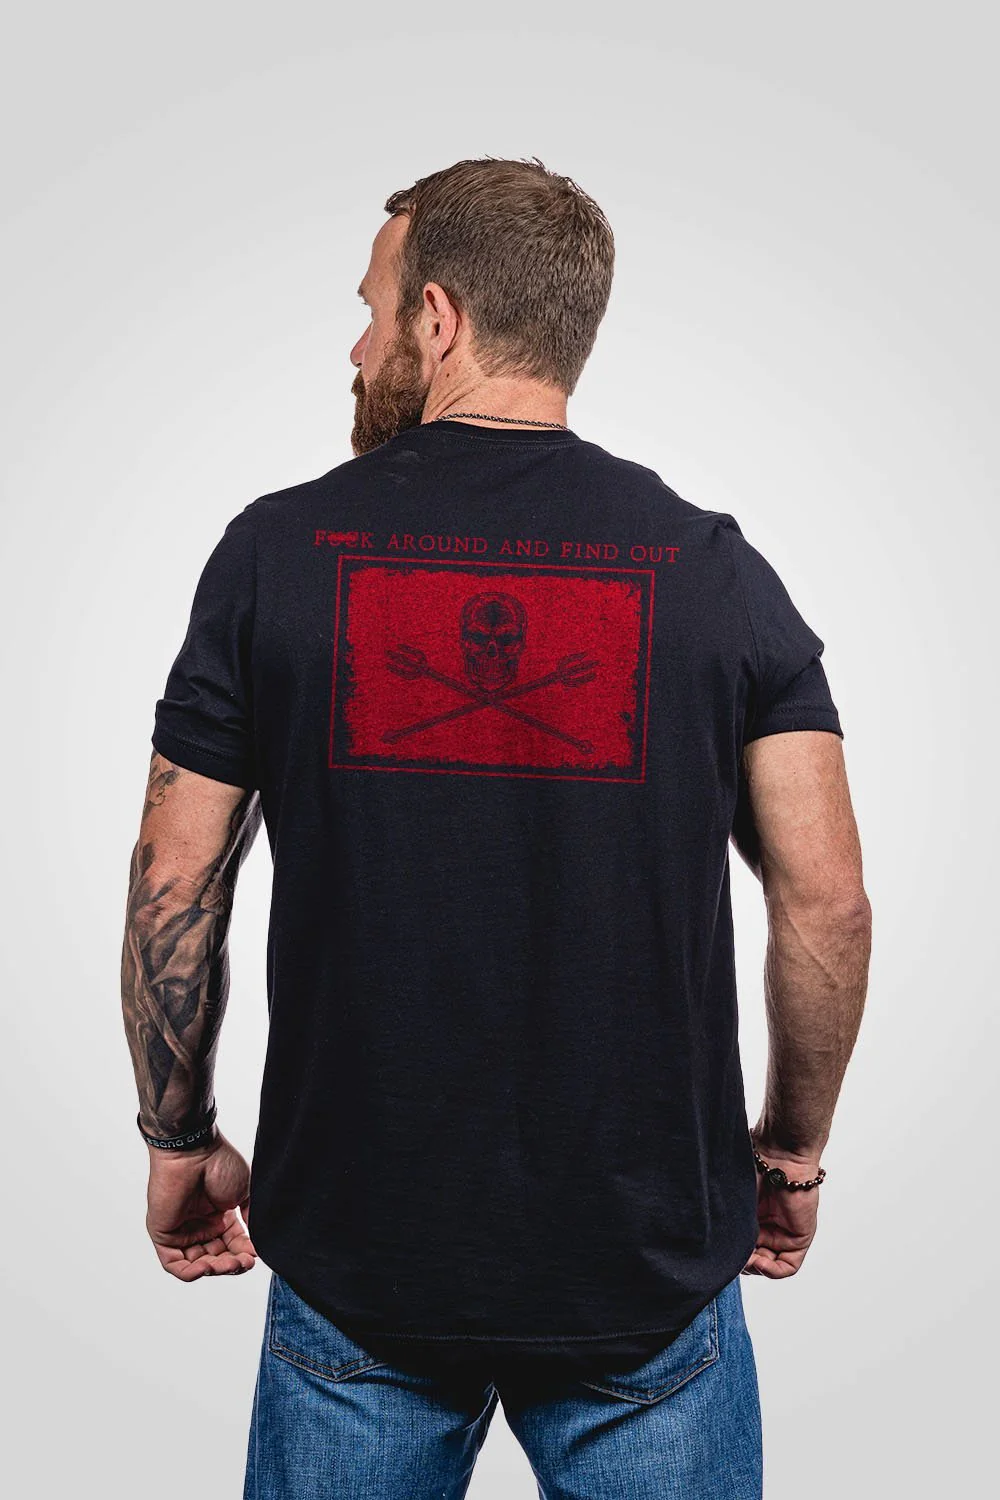 Nine Line Men's FAFO T-Shirt posted by ProdOrigin USA in Men's Apparel